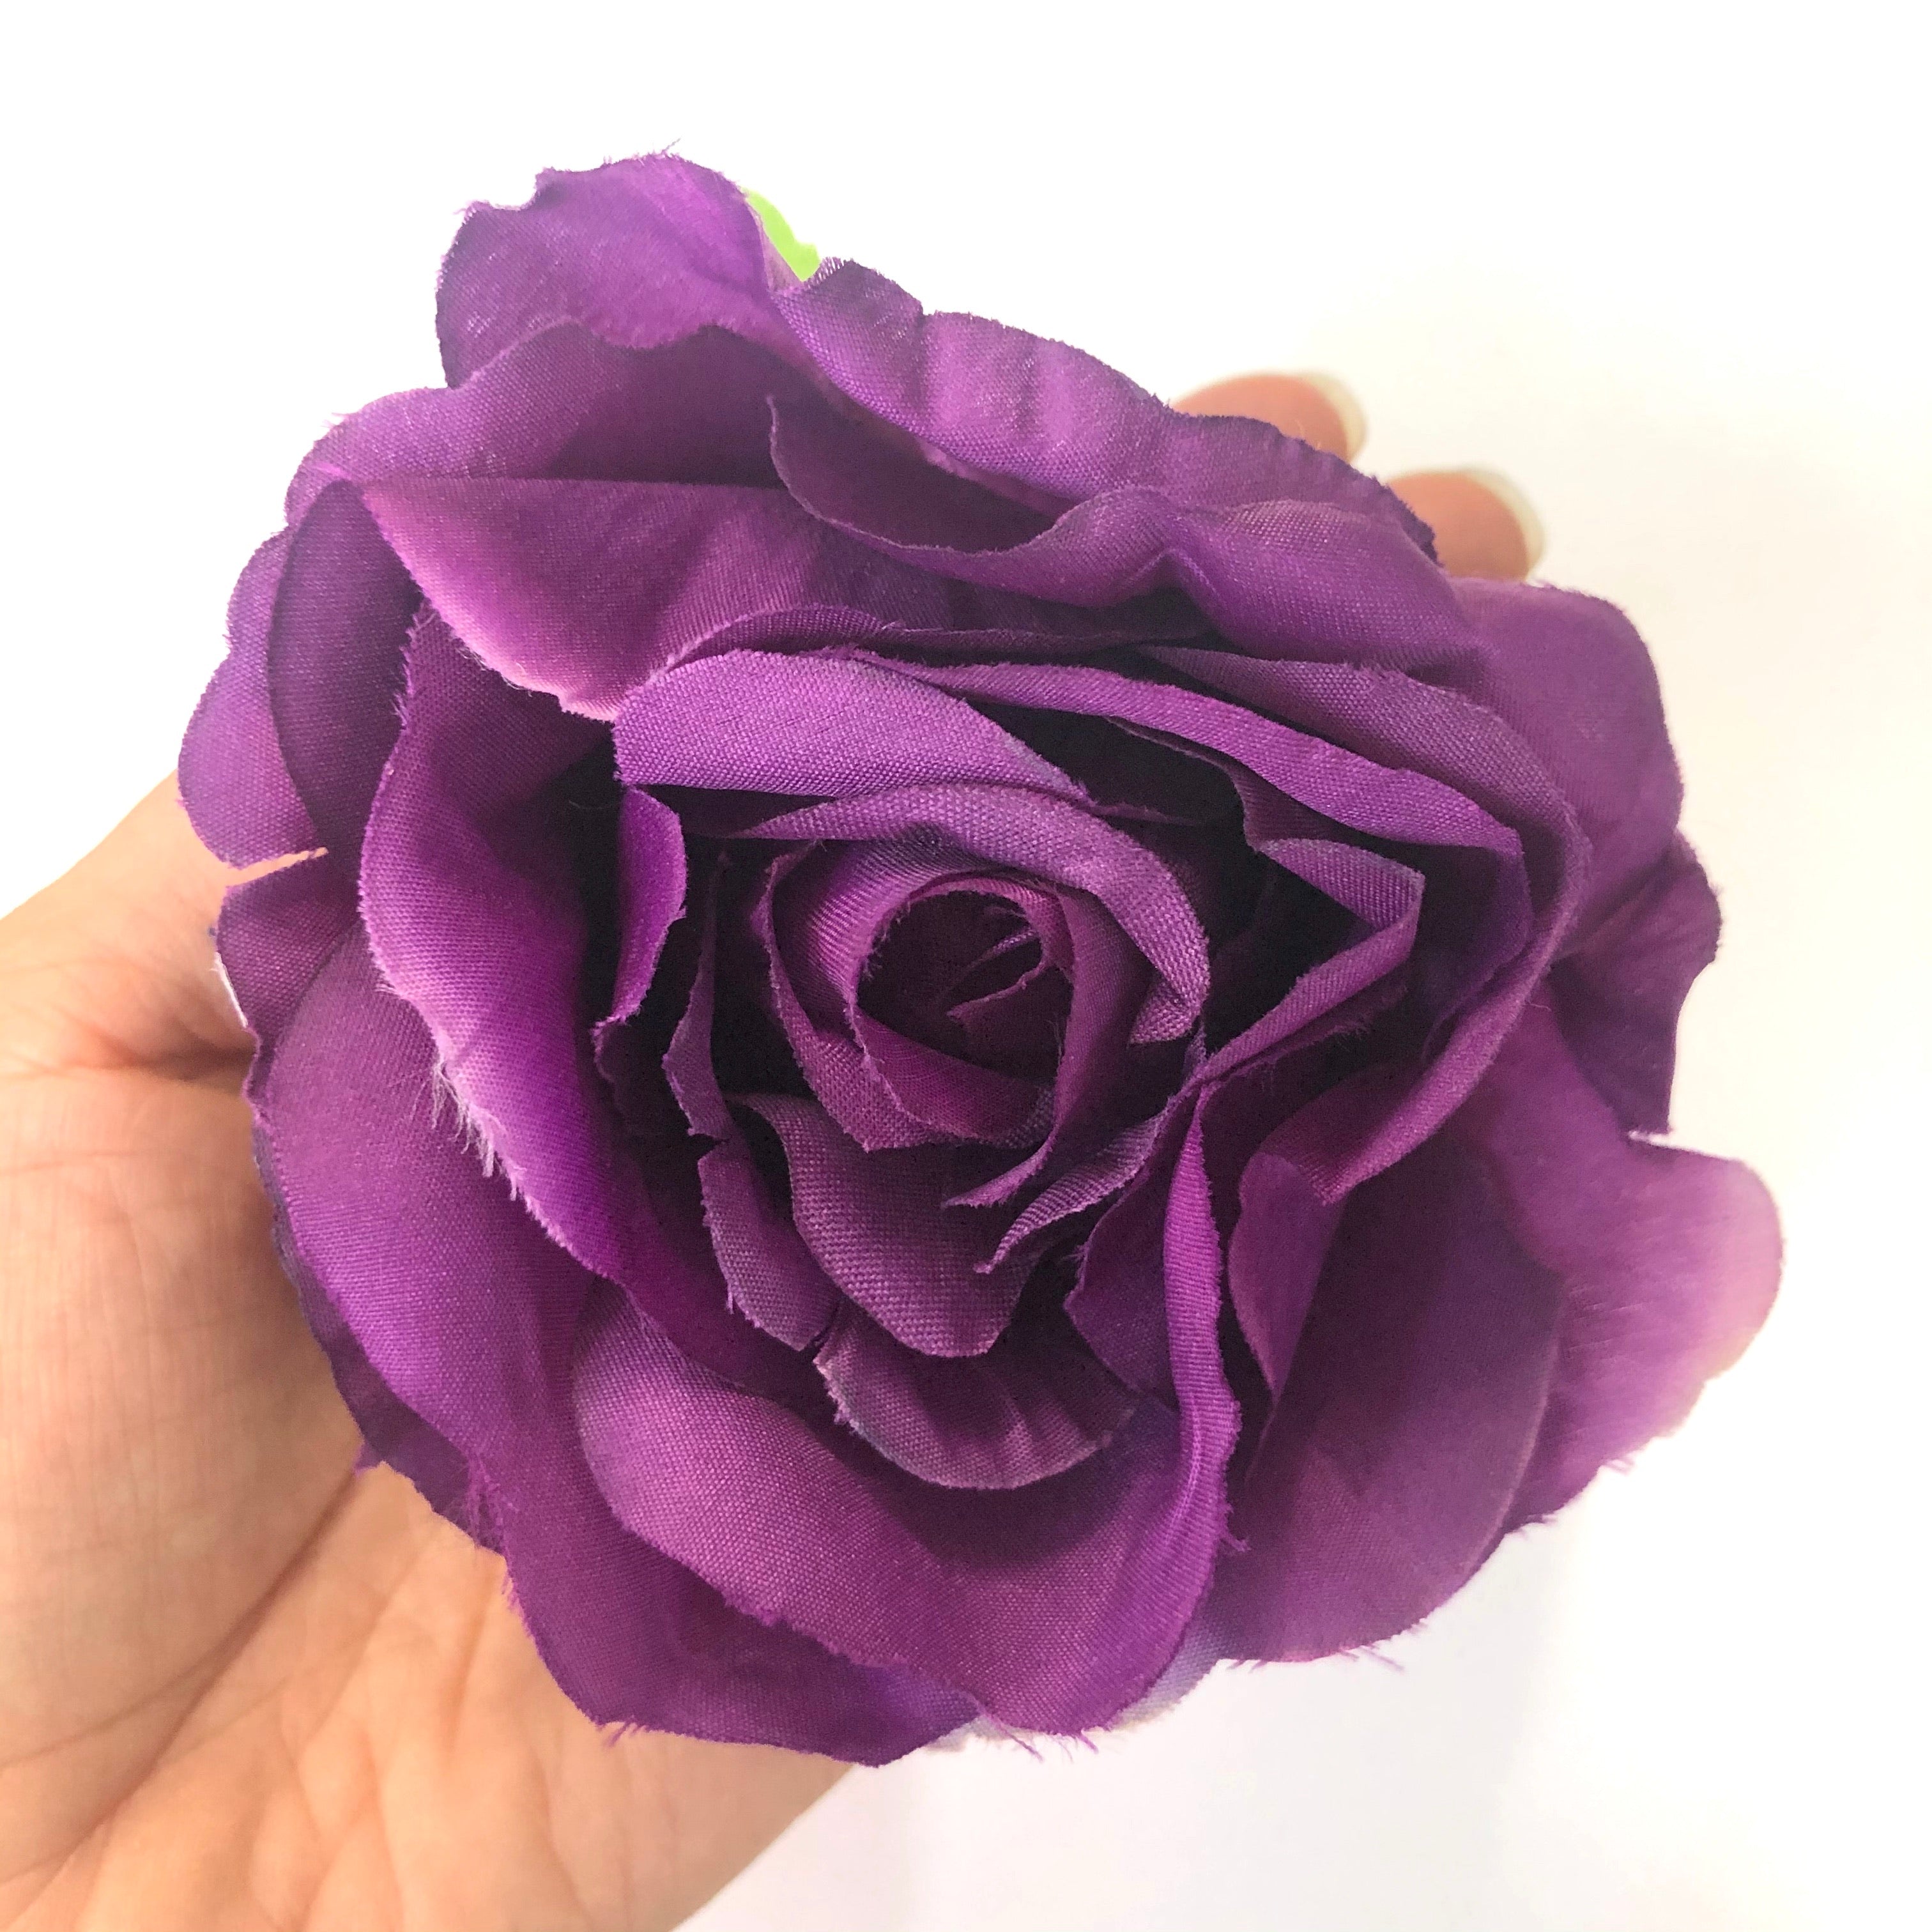 Artificial Silk Flower Head - Purple Rose Style 102 - 1pc